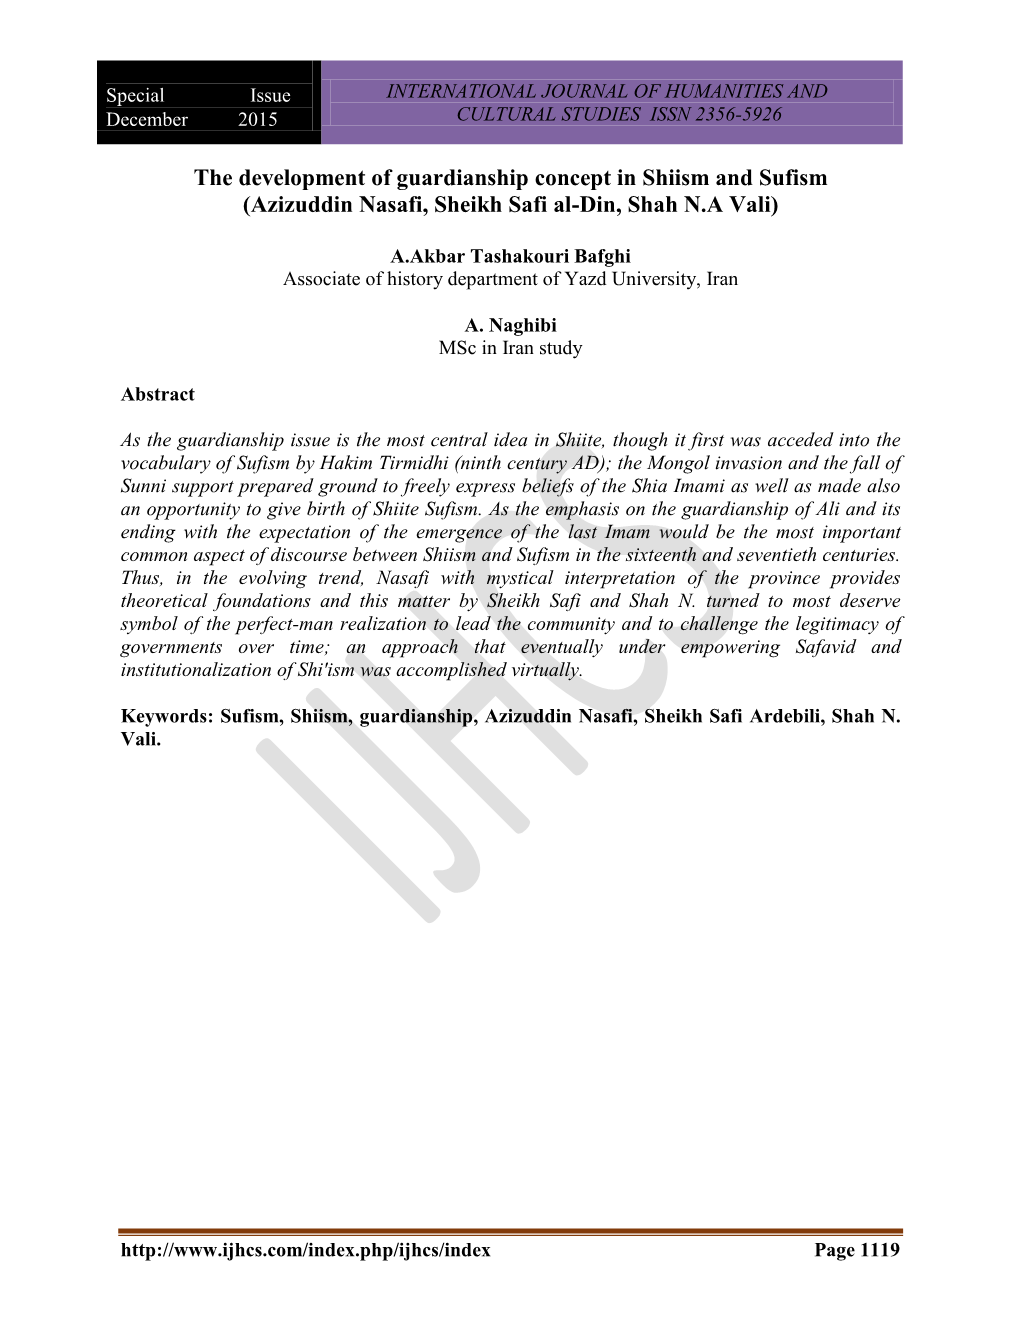 The Development of Guardianship Concept in Shiism and Sufism (Azizuddin Nasafi, Sheikh Safi Al-Din, Shah N.A Vali)